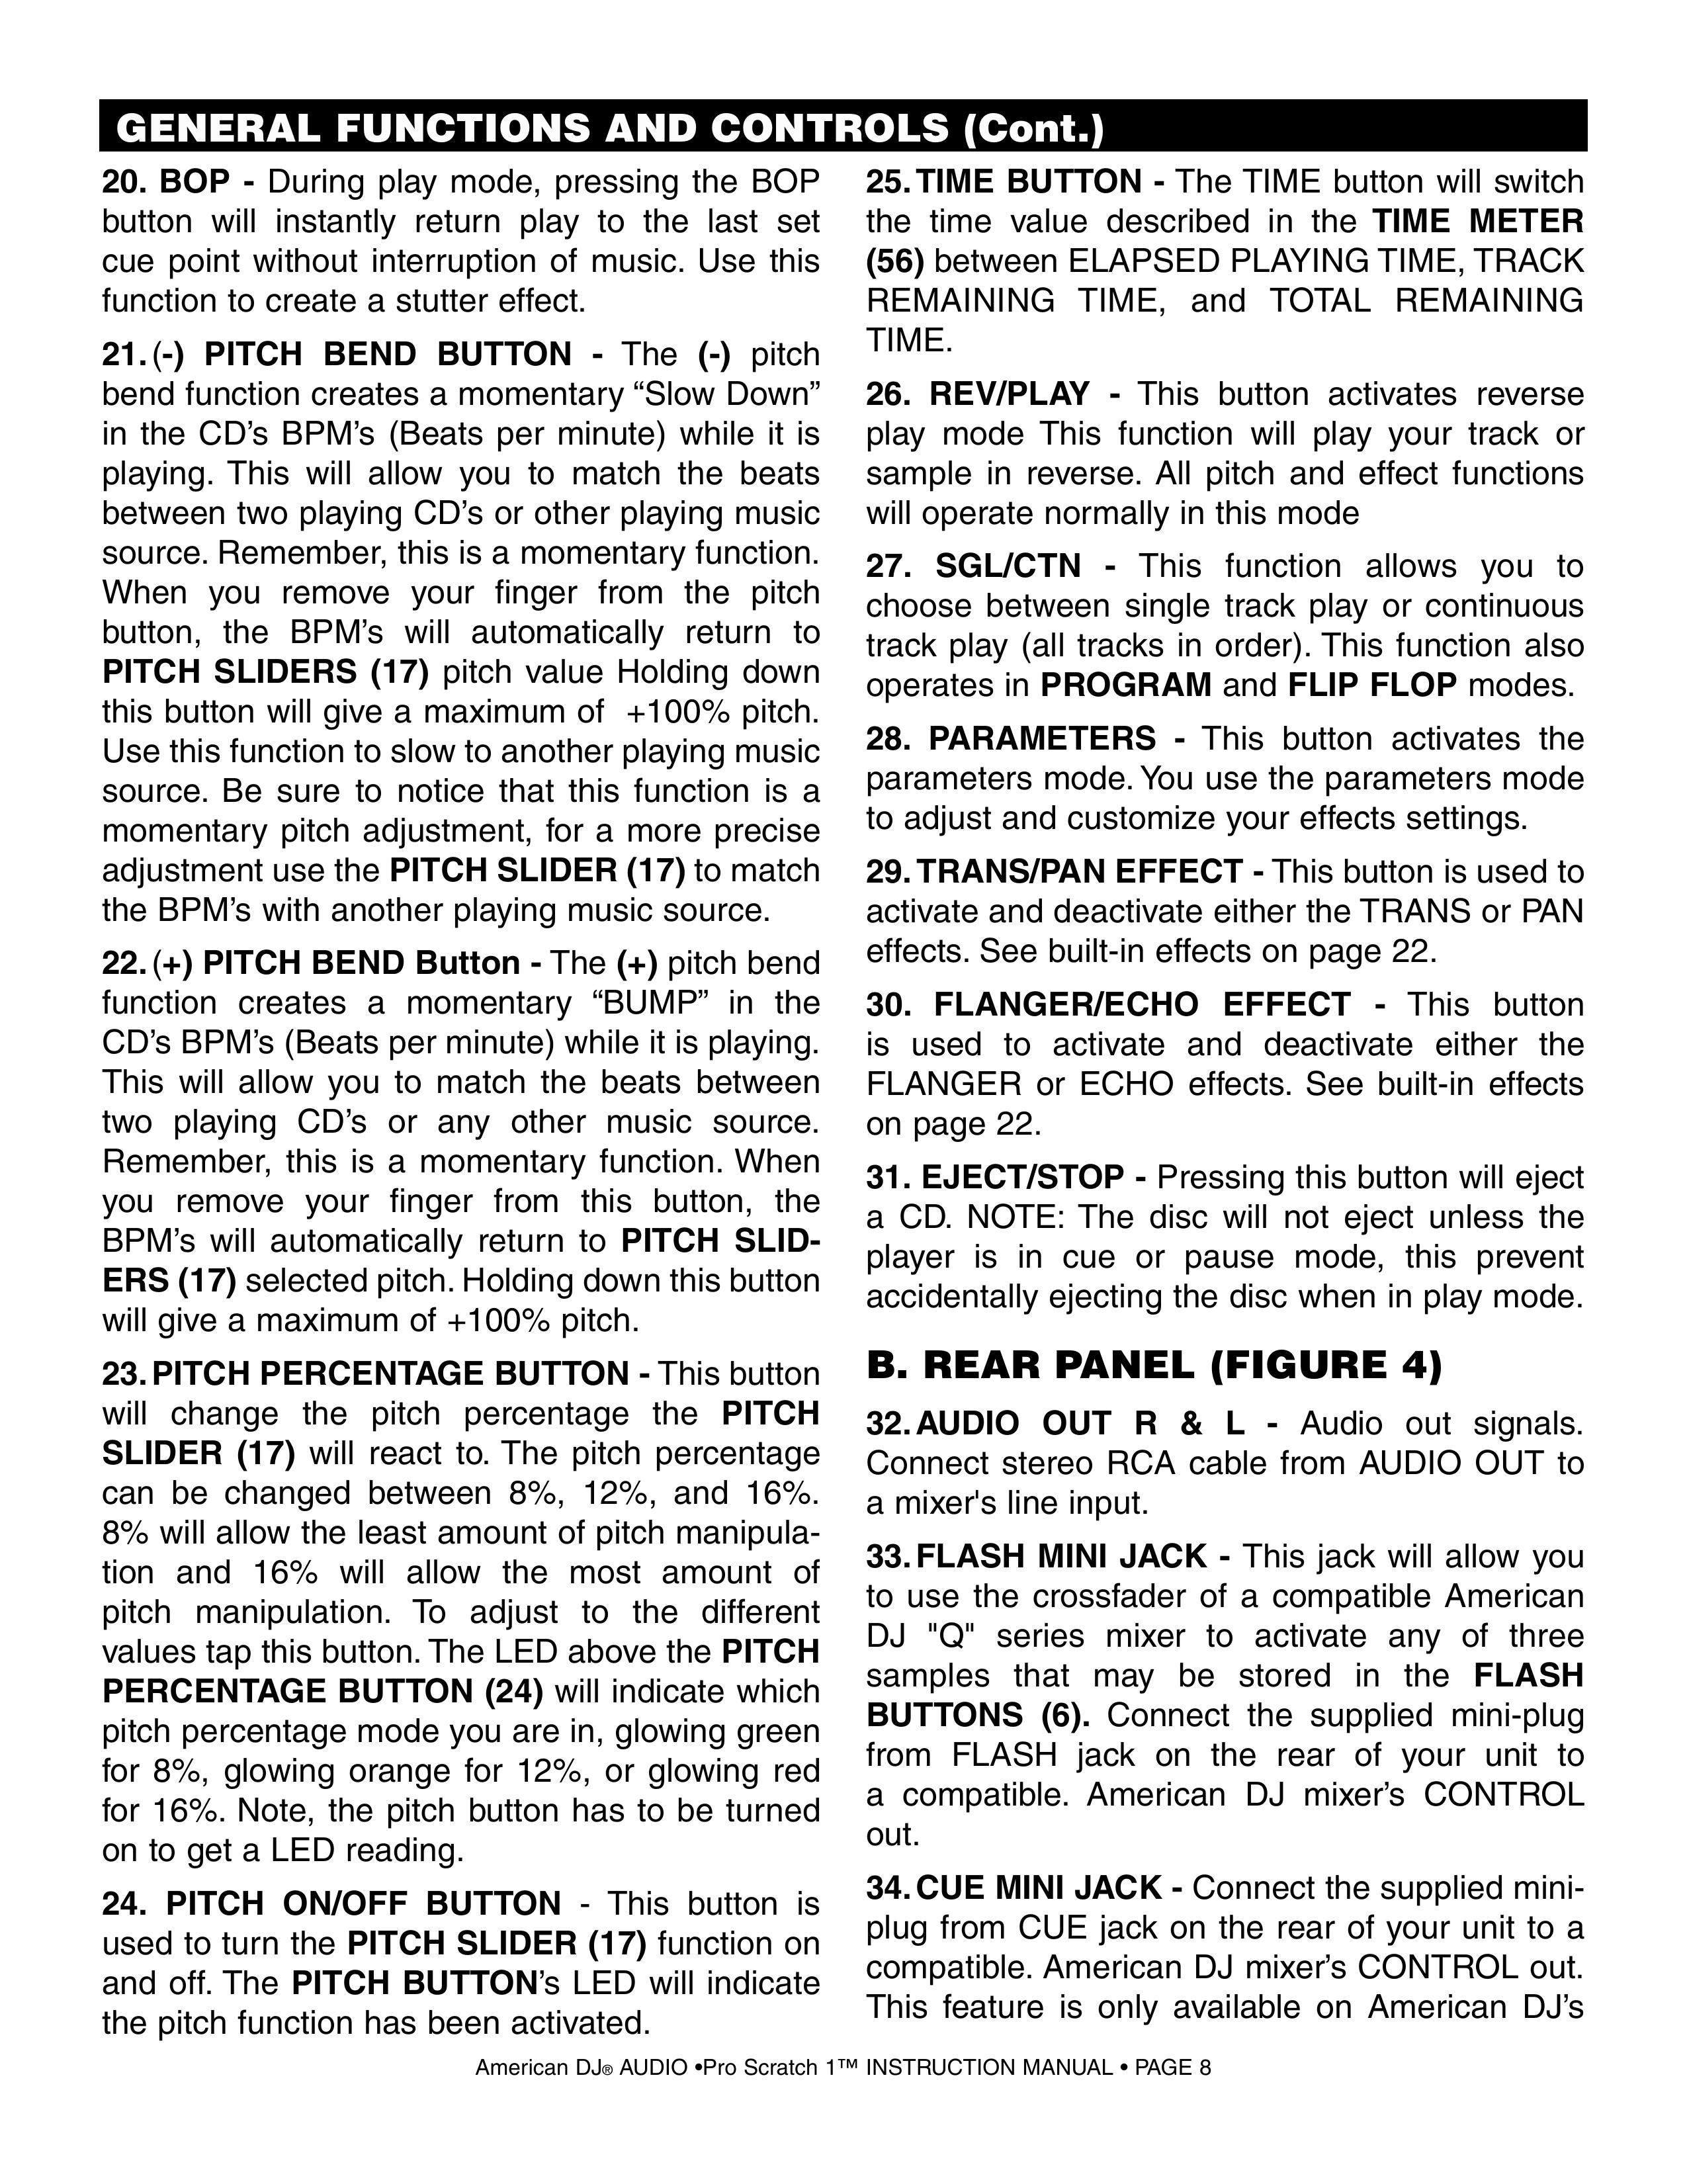 American Audio Pro Scratch 1 DJ Equipment User Manual (Page 8)